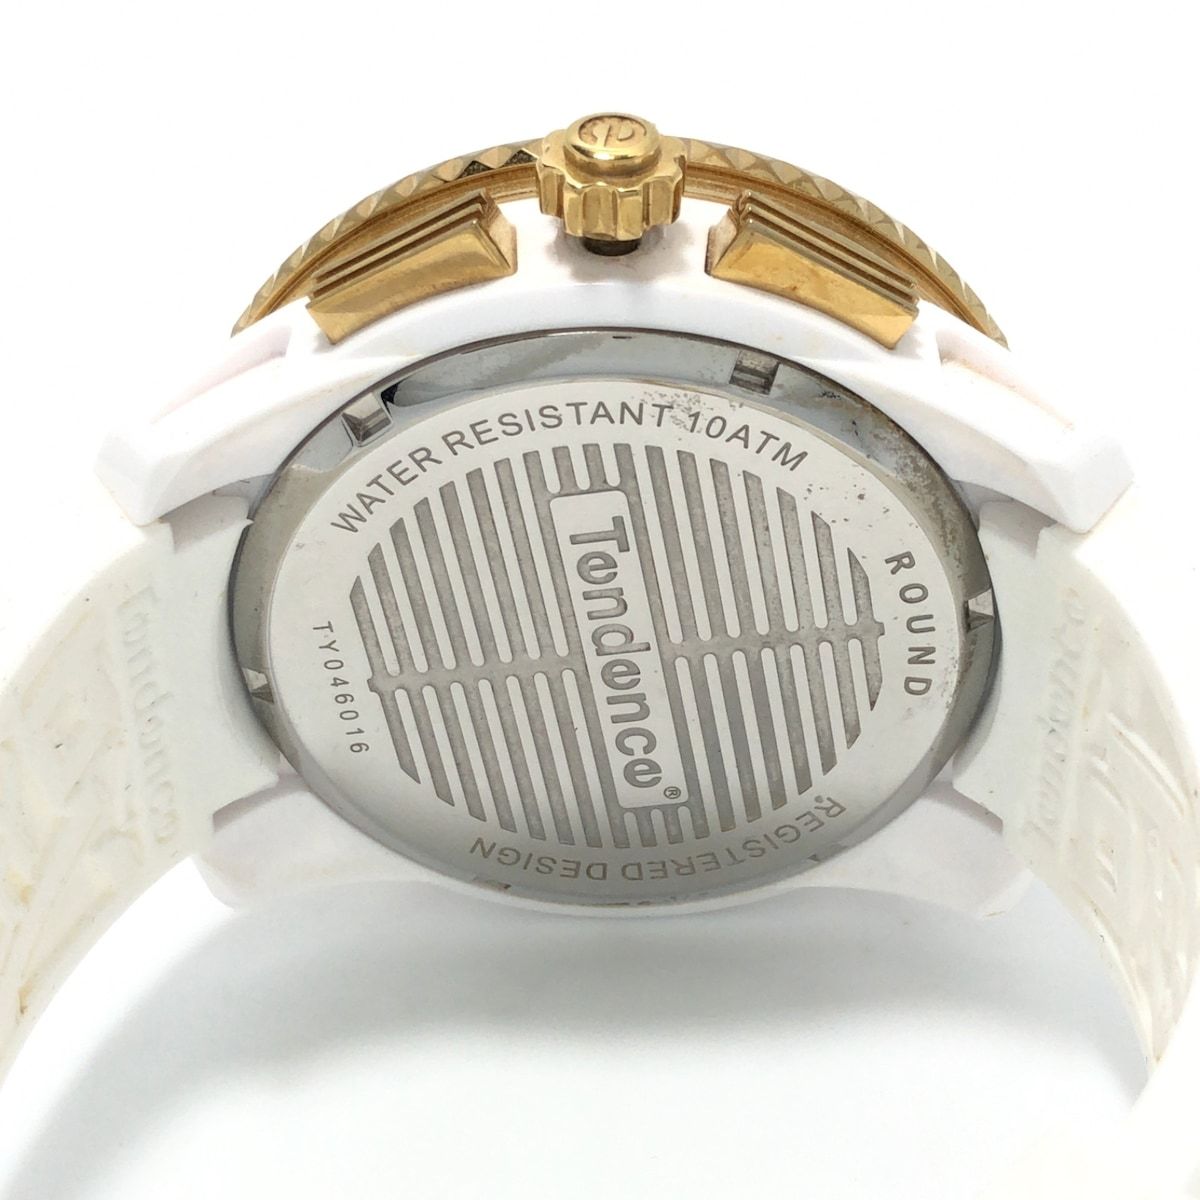 TENDENCE(テンデンス) 腕時計 - TY046016 メンズ クロノグラフ 白 